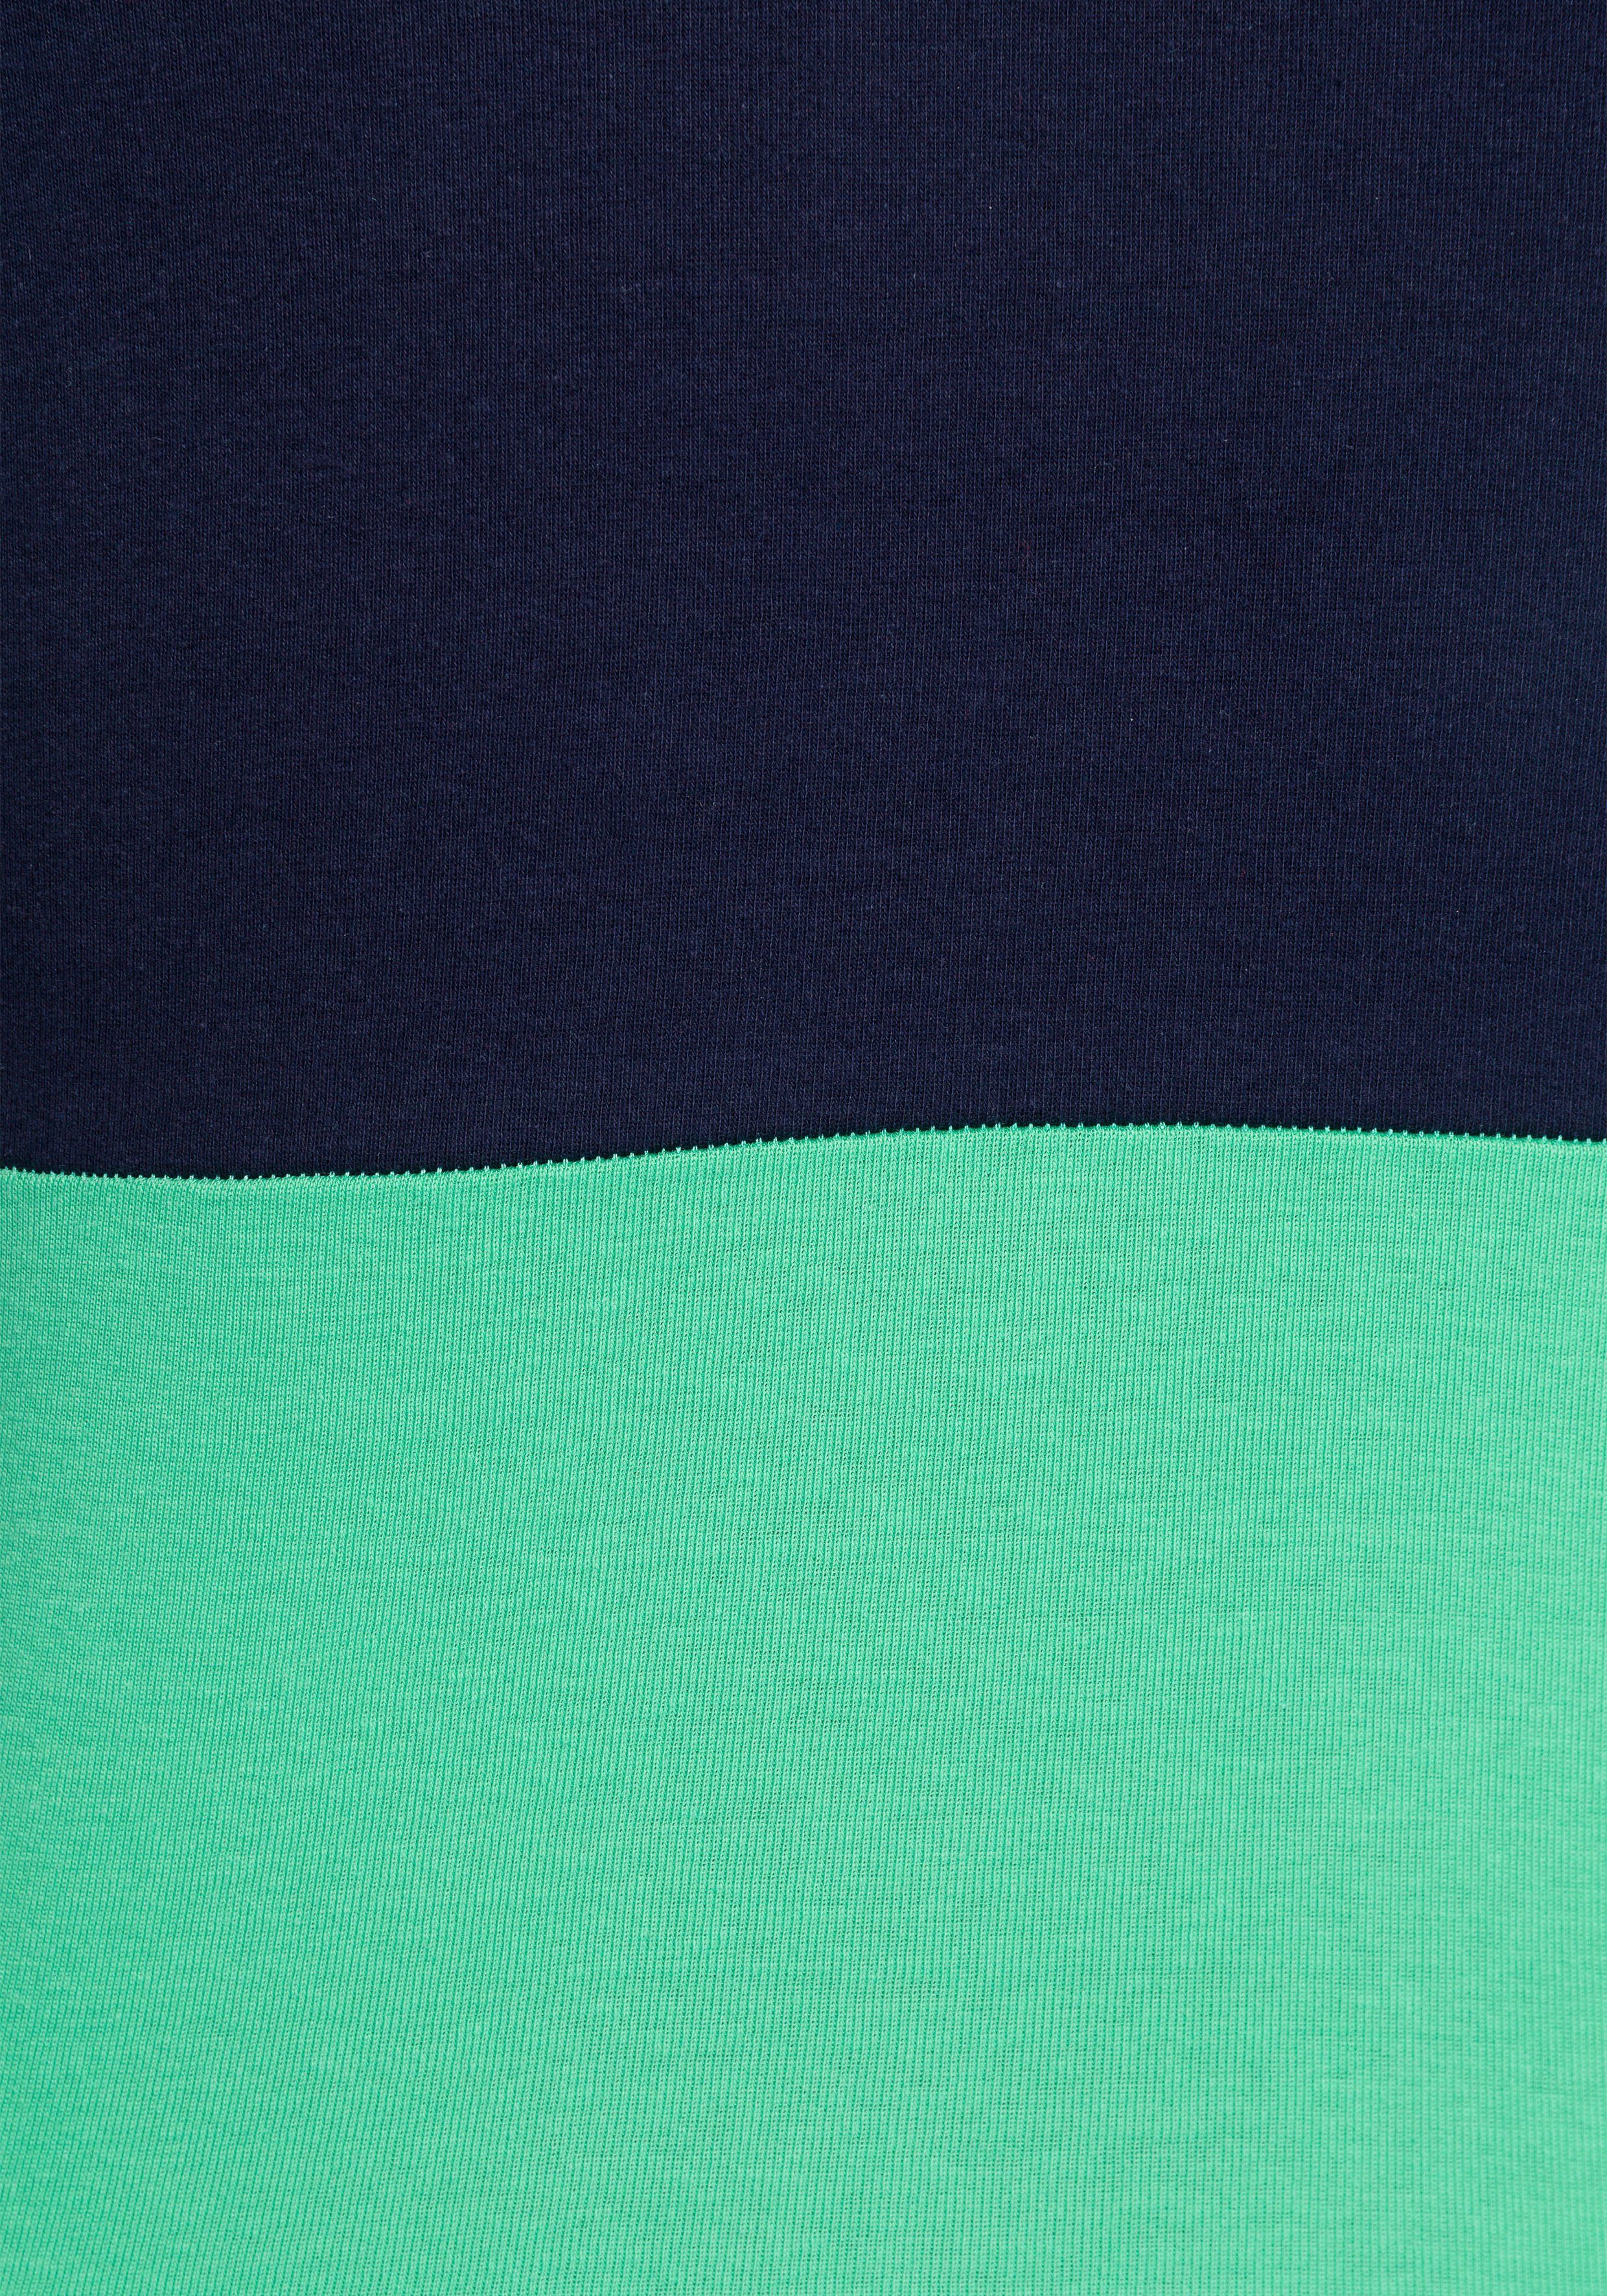 KangaROOS Kapuzenshirt in verspielter Ringel-Optik mit Colorblocking grün-marine-gestreift Design